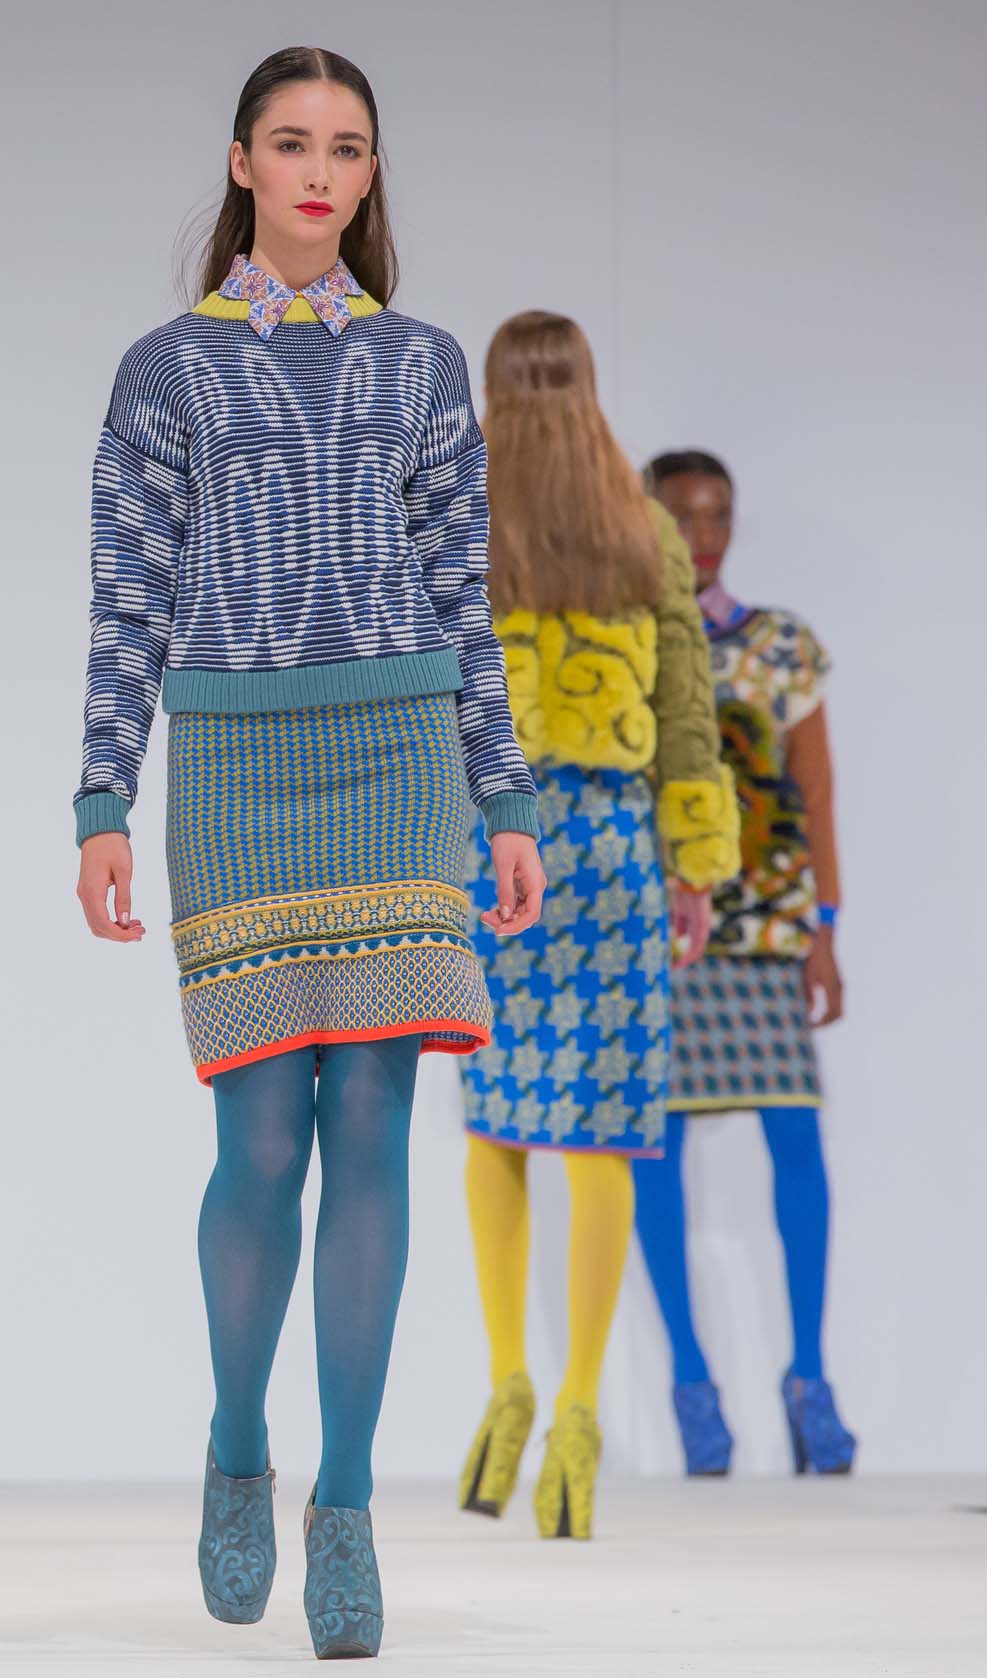 Thea Sanders’ colourful, patterned knitwear was recognised at Graduate Fashion Week 2013. © NTU